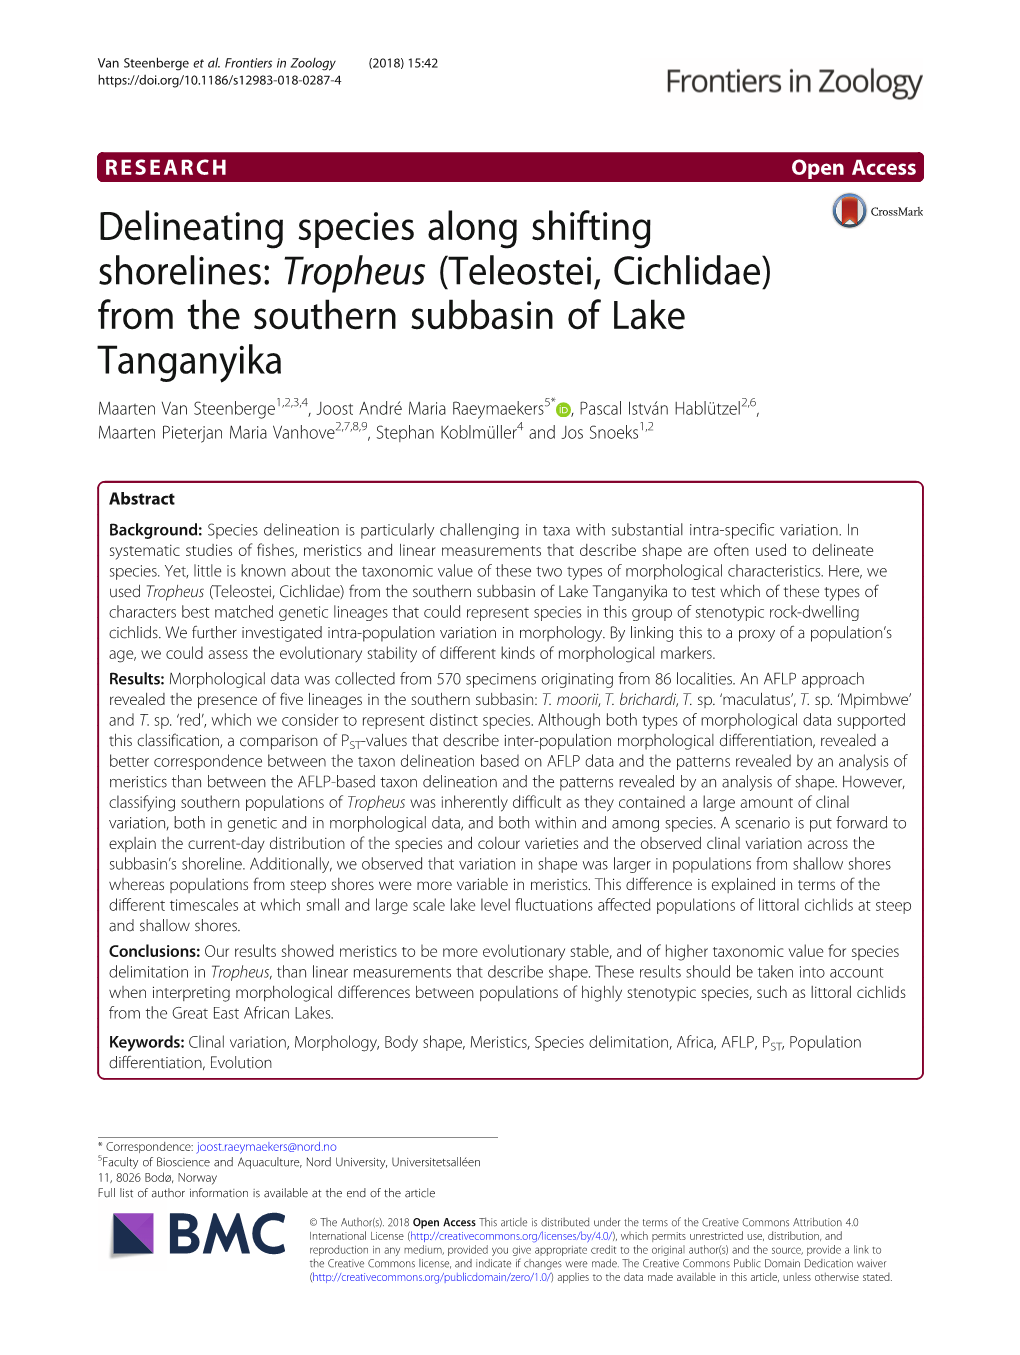 Delineating Species Along Shifting Shorelines: Tropheus